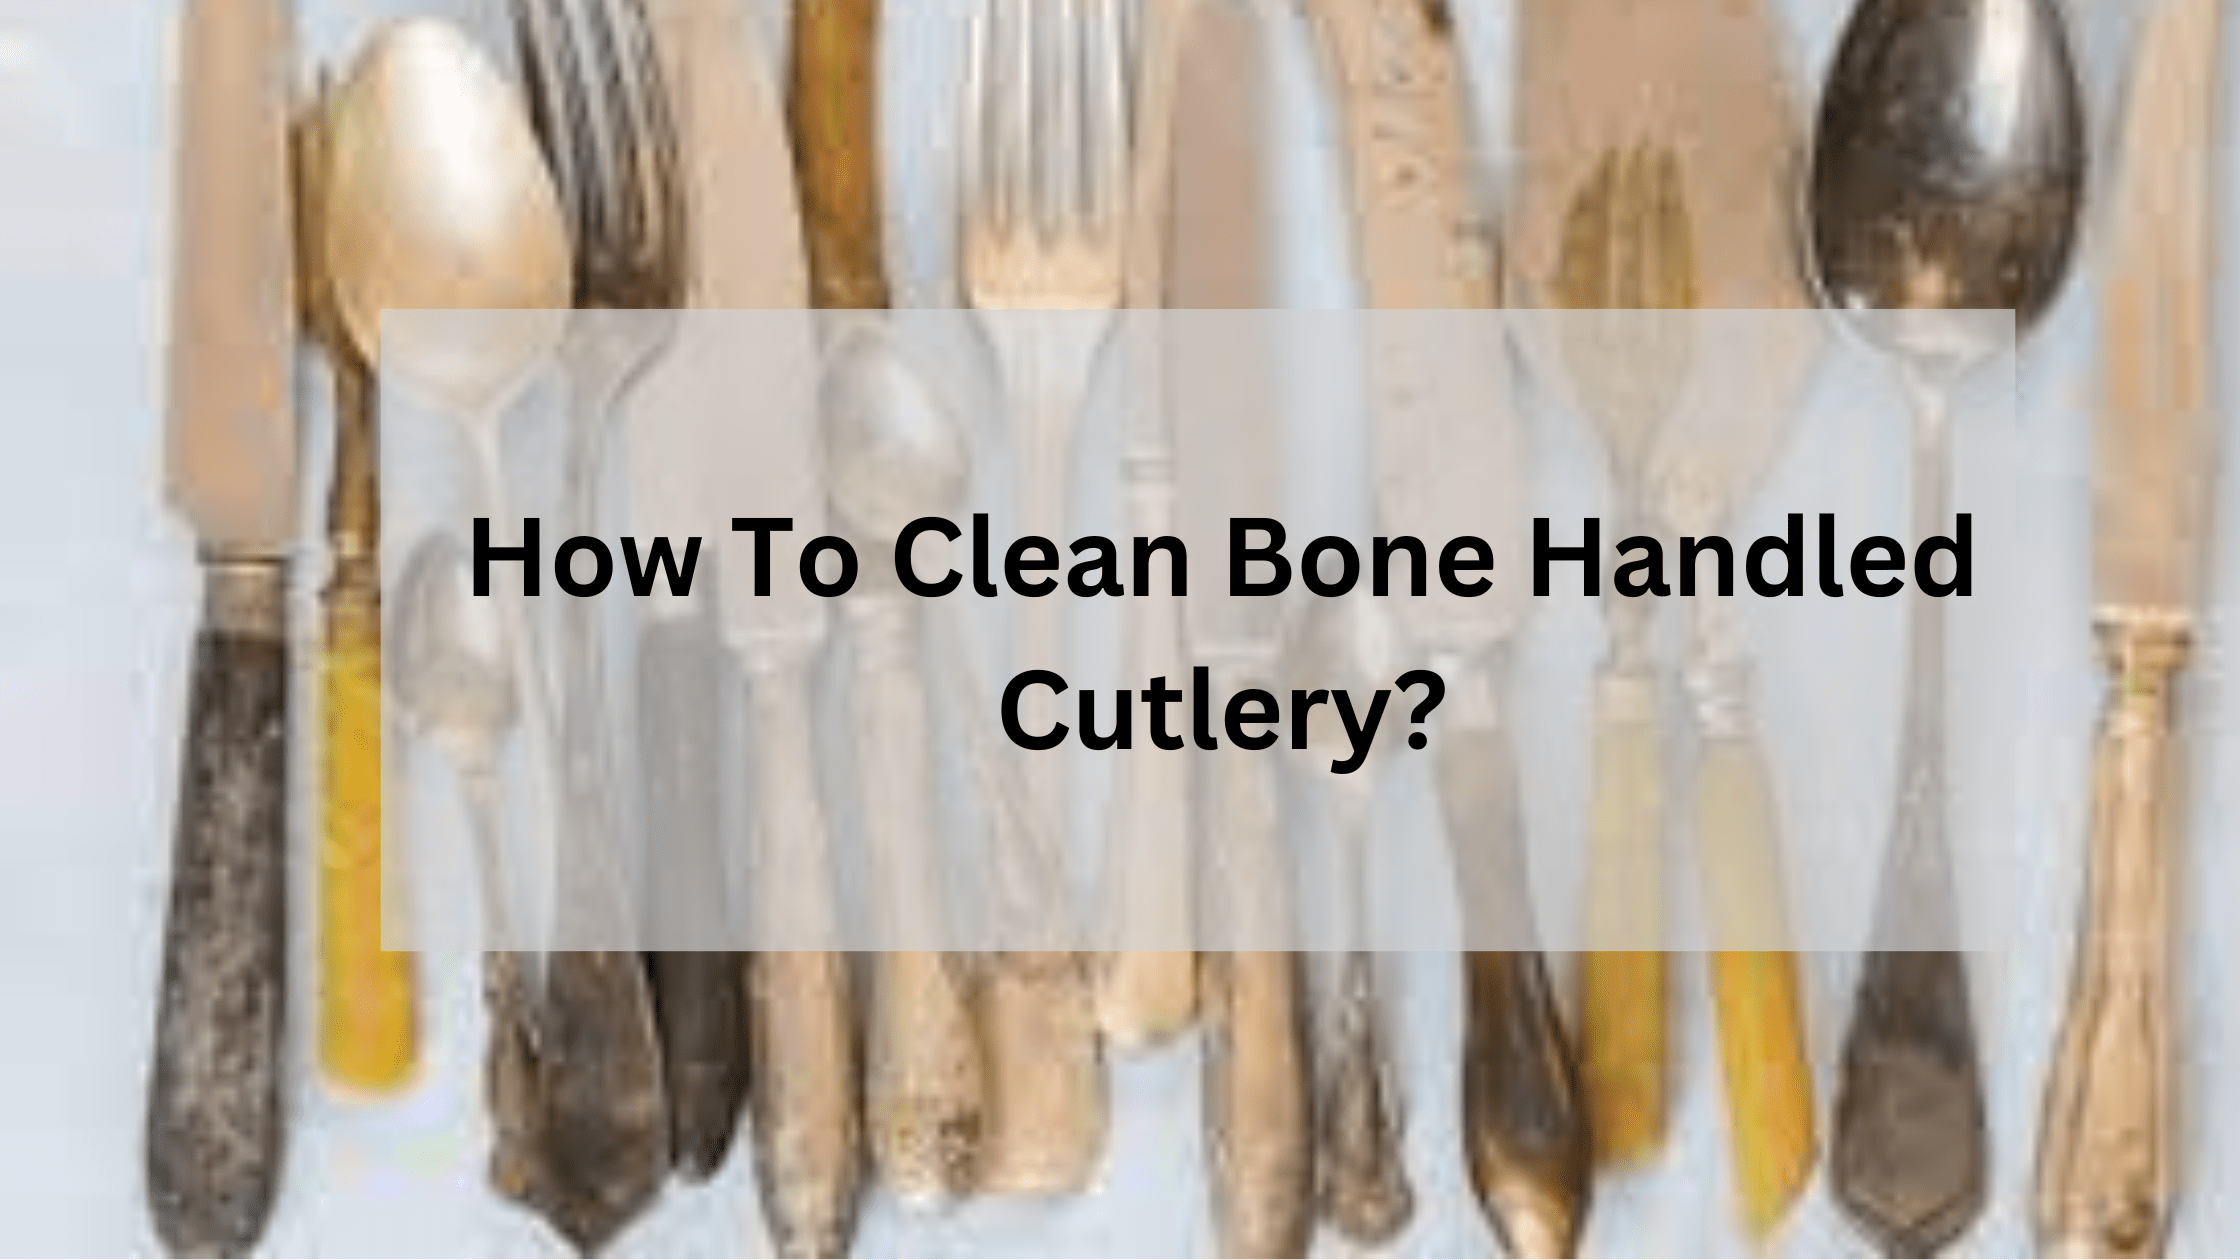 How To Clean Bone Handled Cutlery?